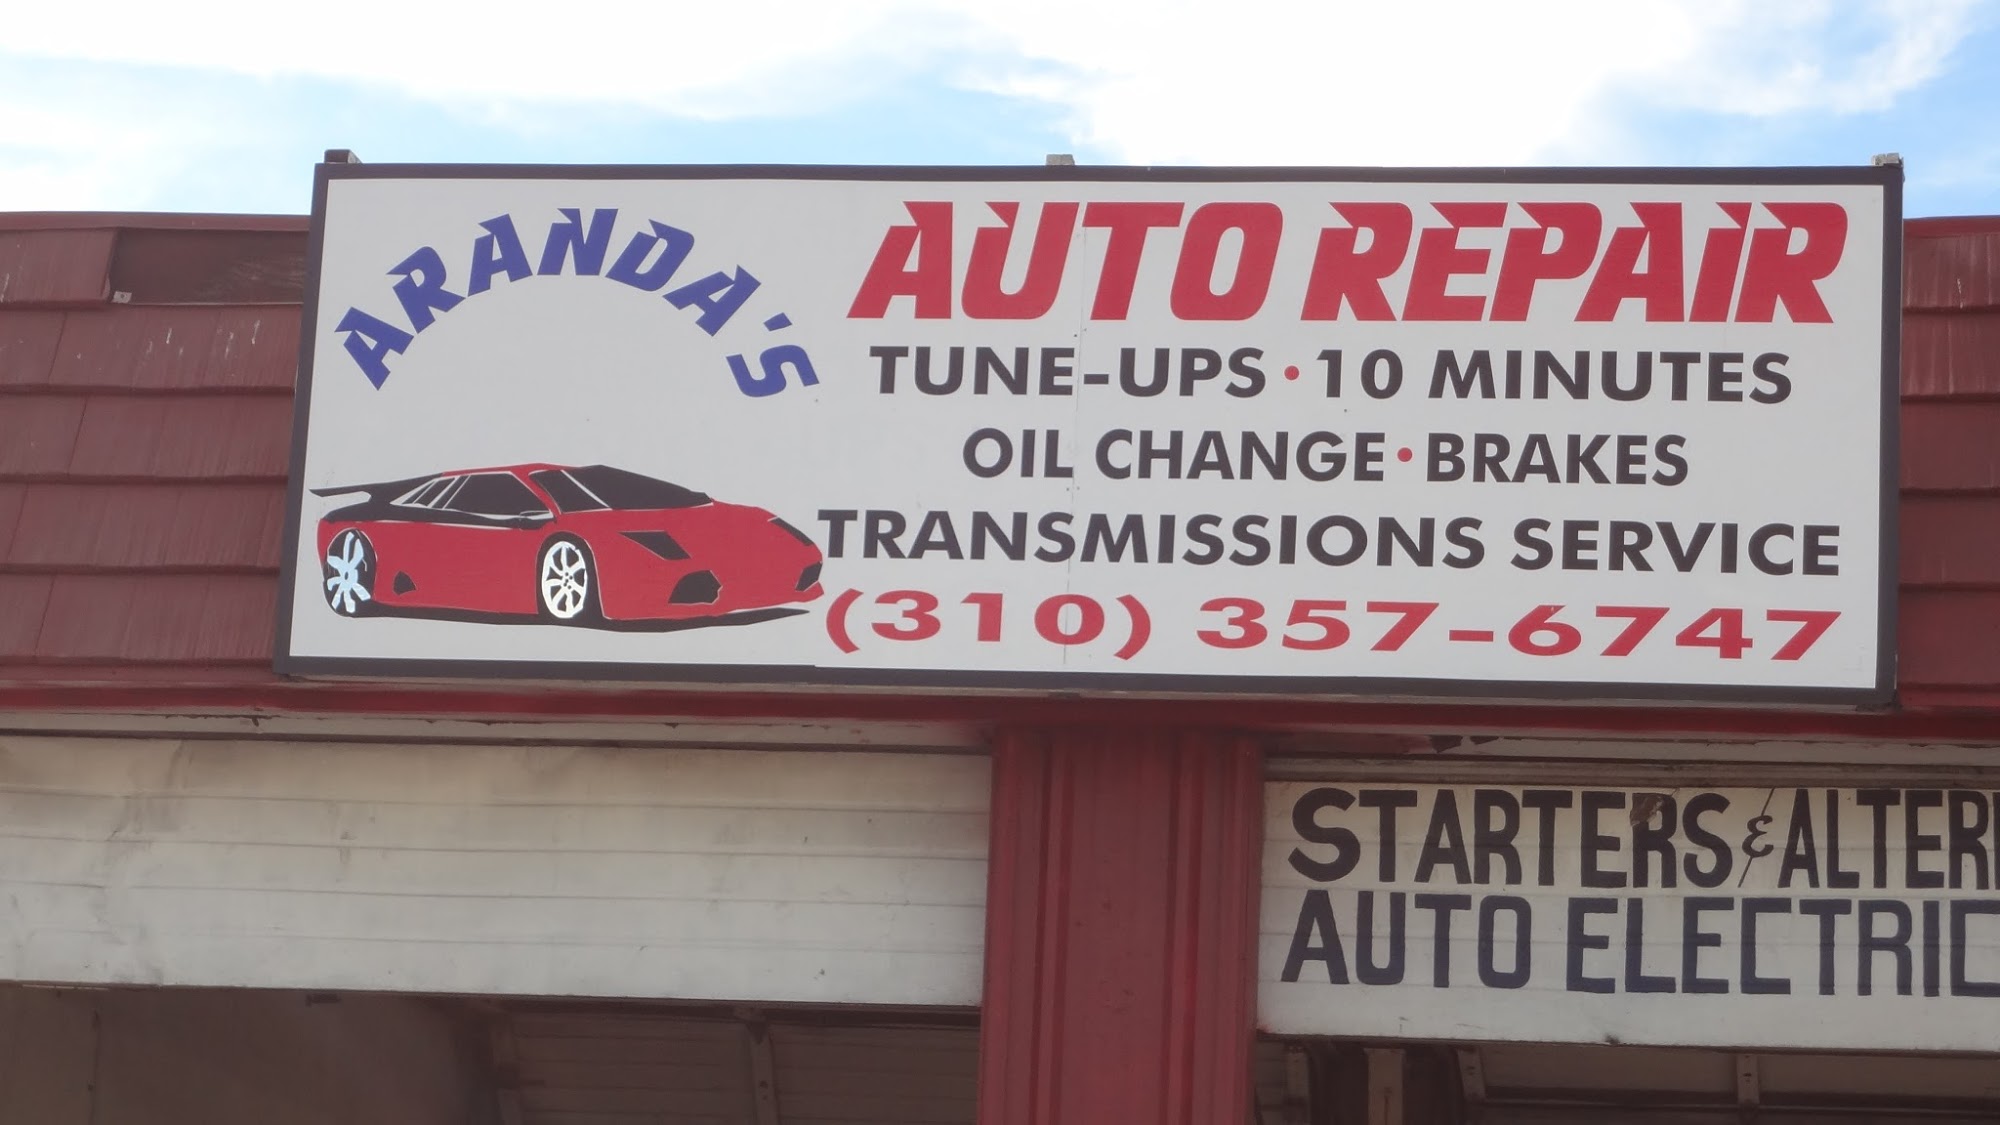 Aranda's Auto Repair